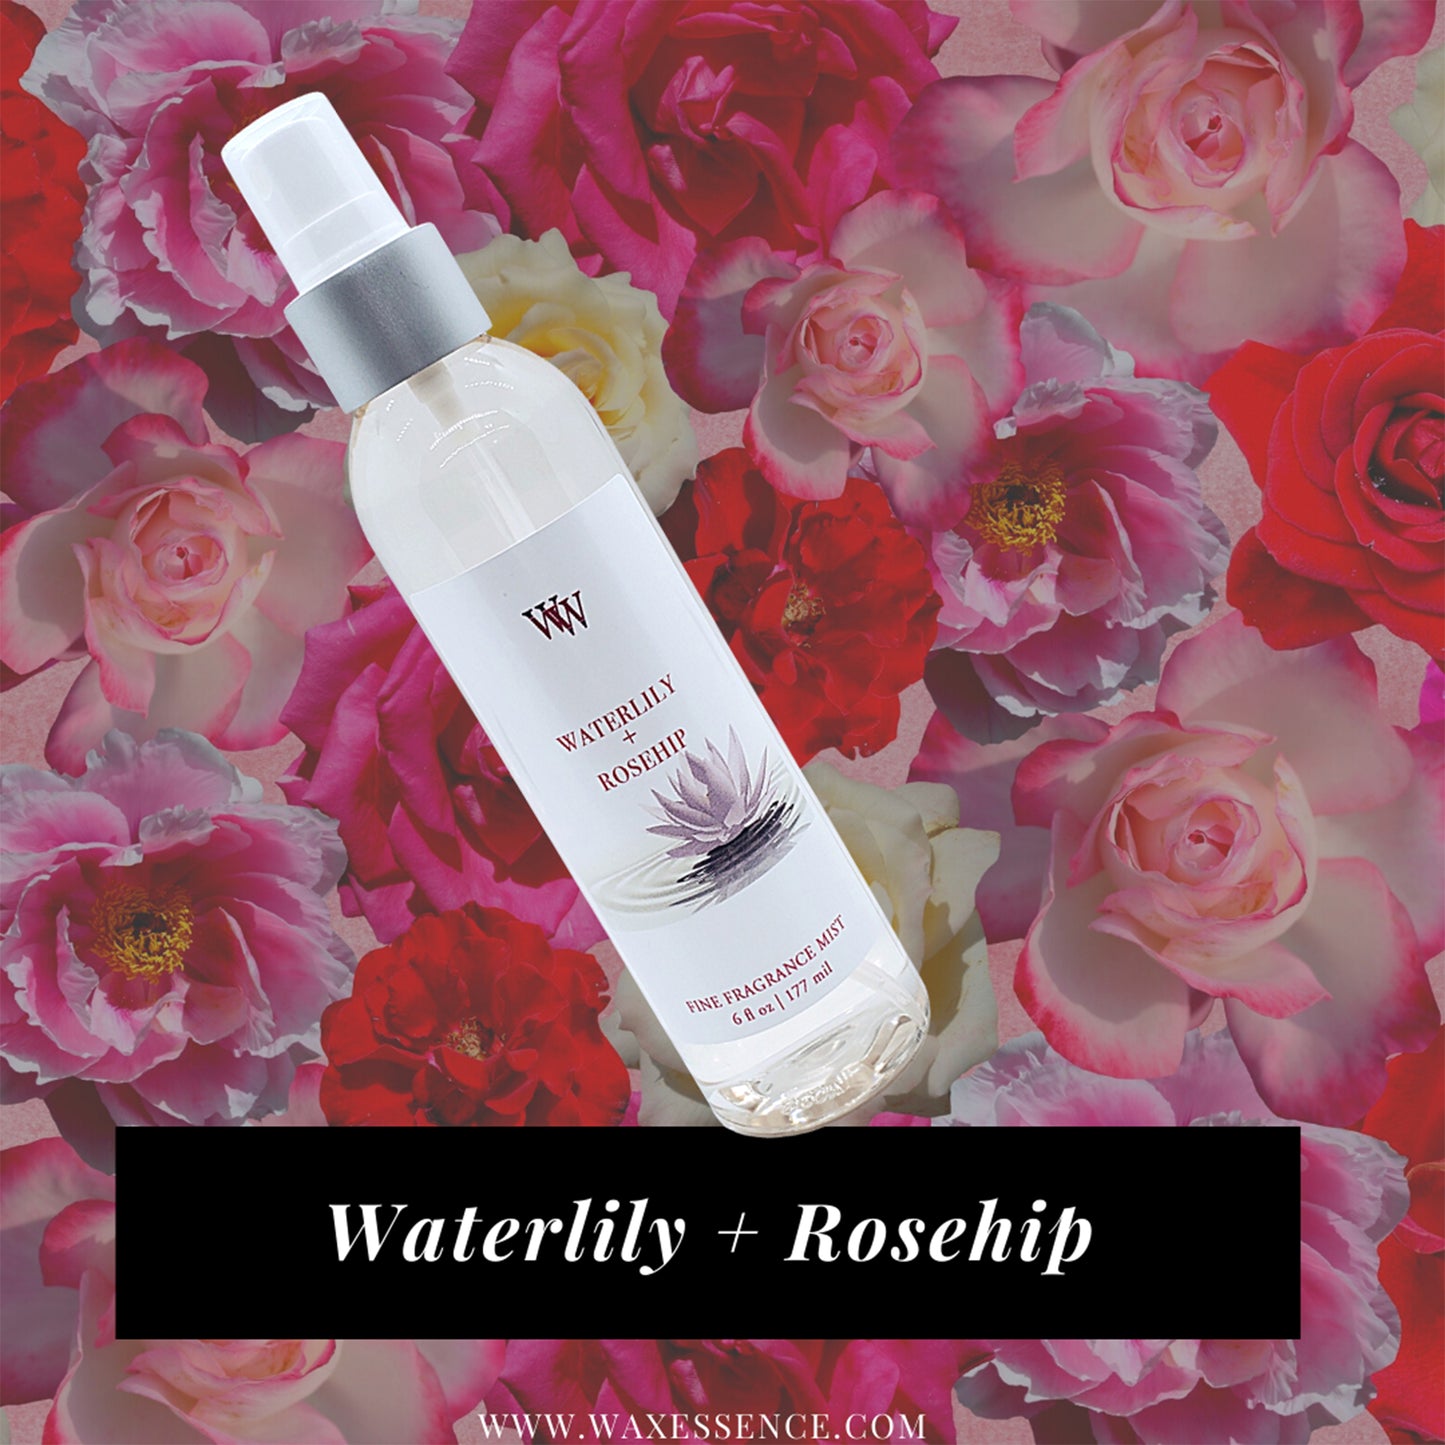 Fine Fragrance Body Mist | Waterlily + Rosehip | 177 ml